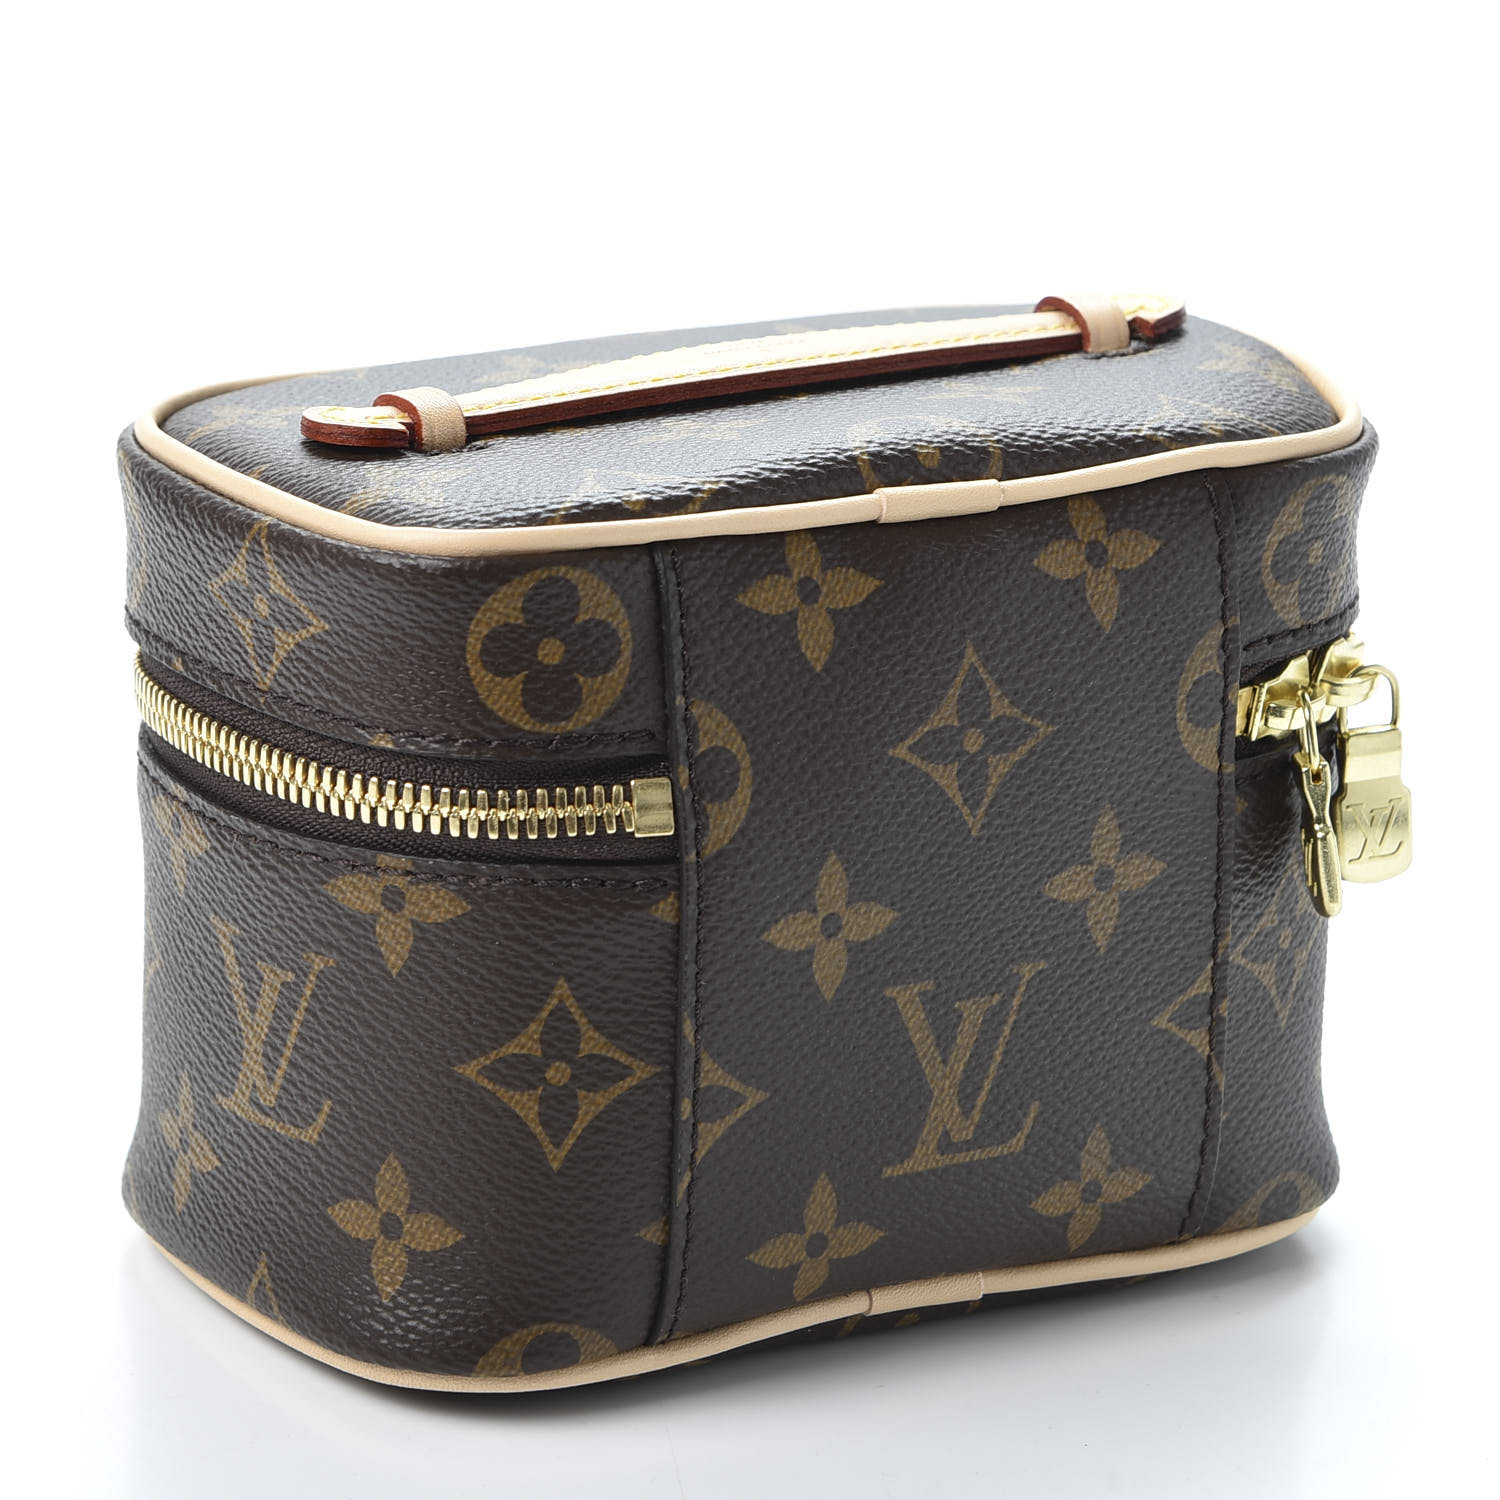 Louis Vuitton Sac Plat BB unboxing, What fit inside